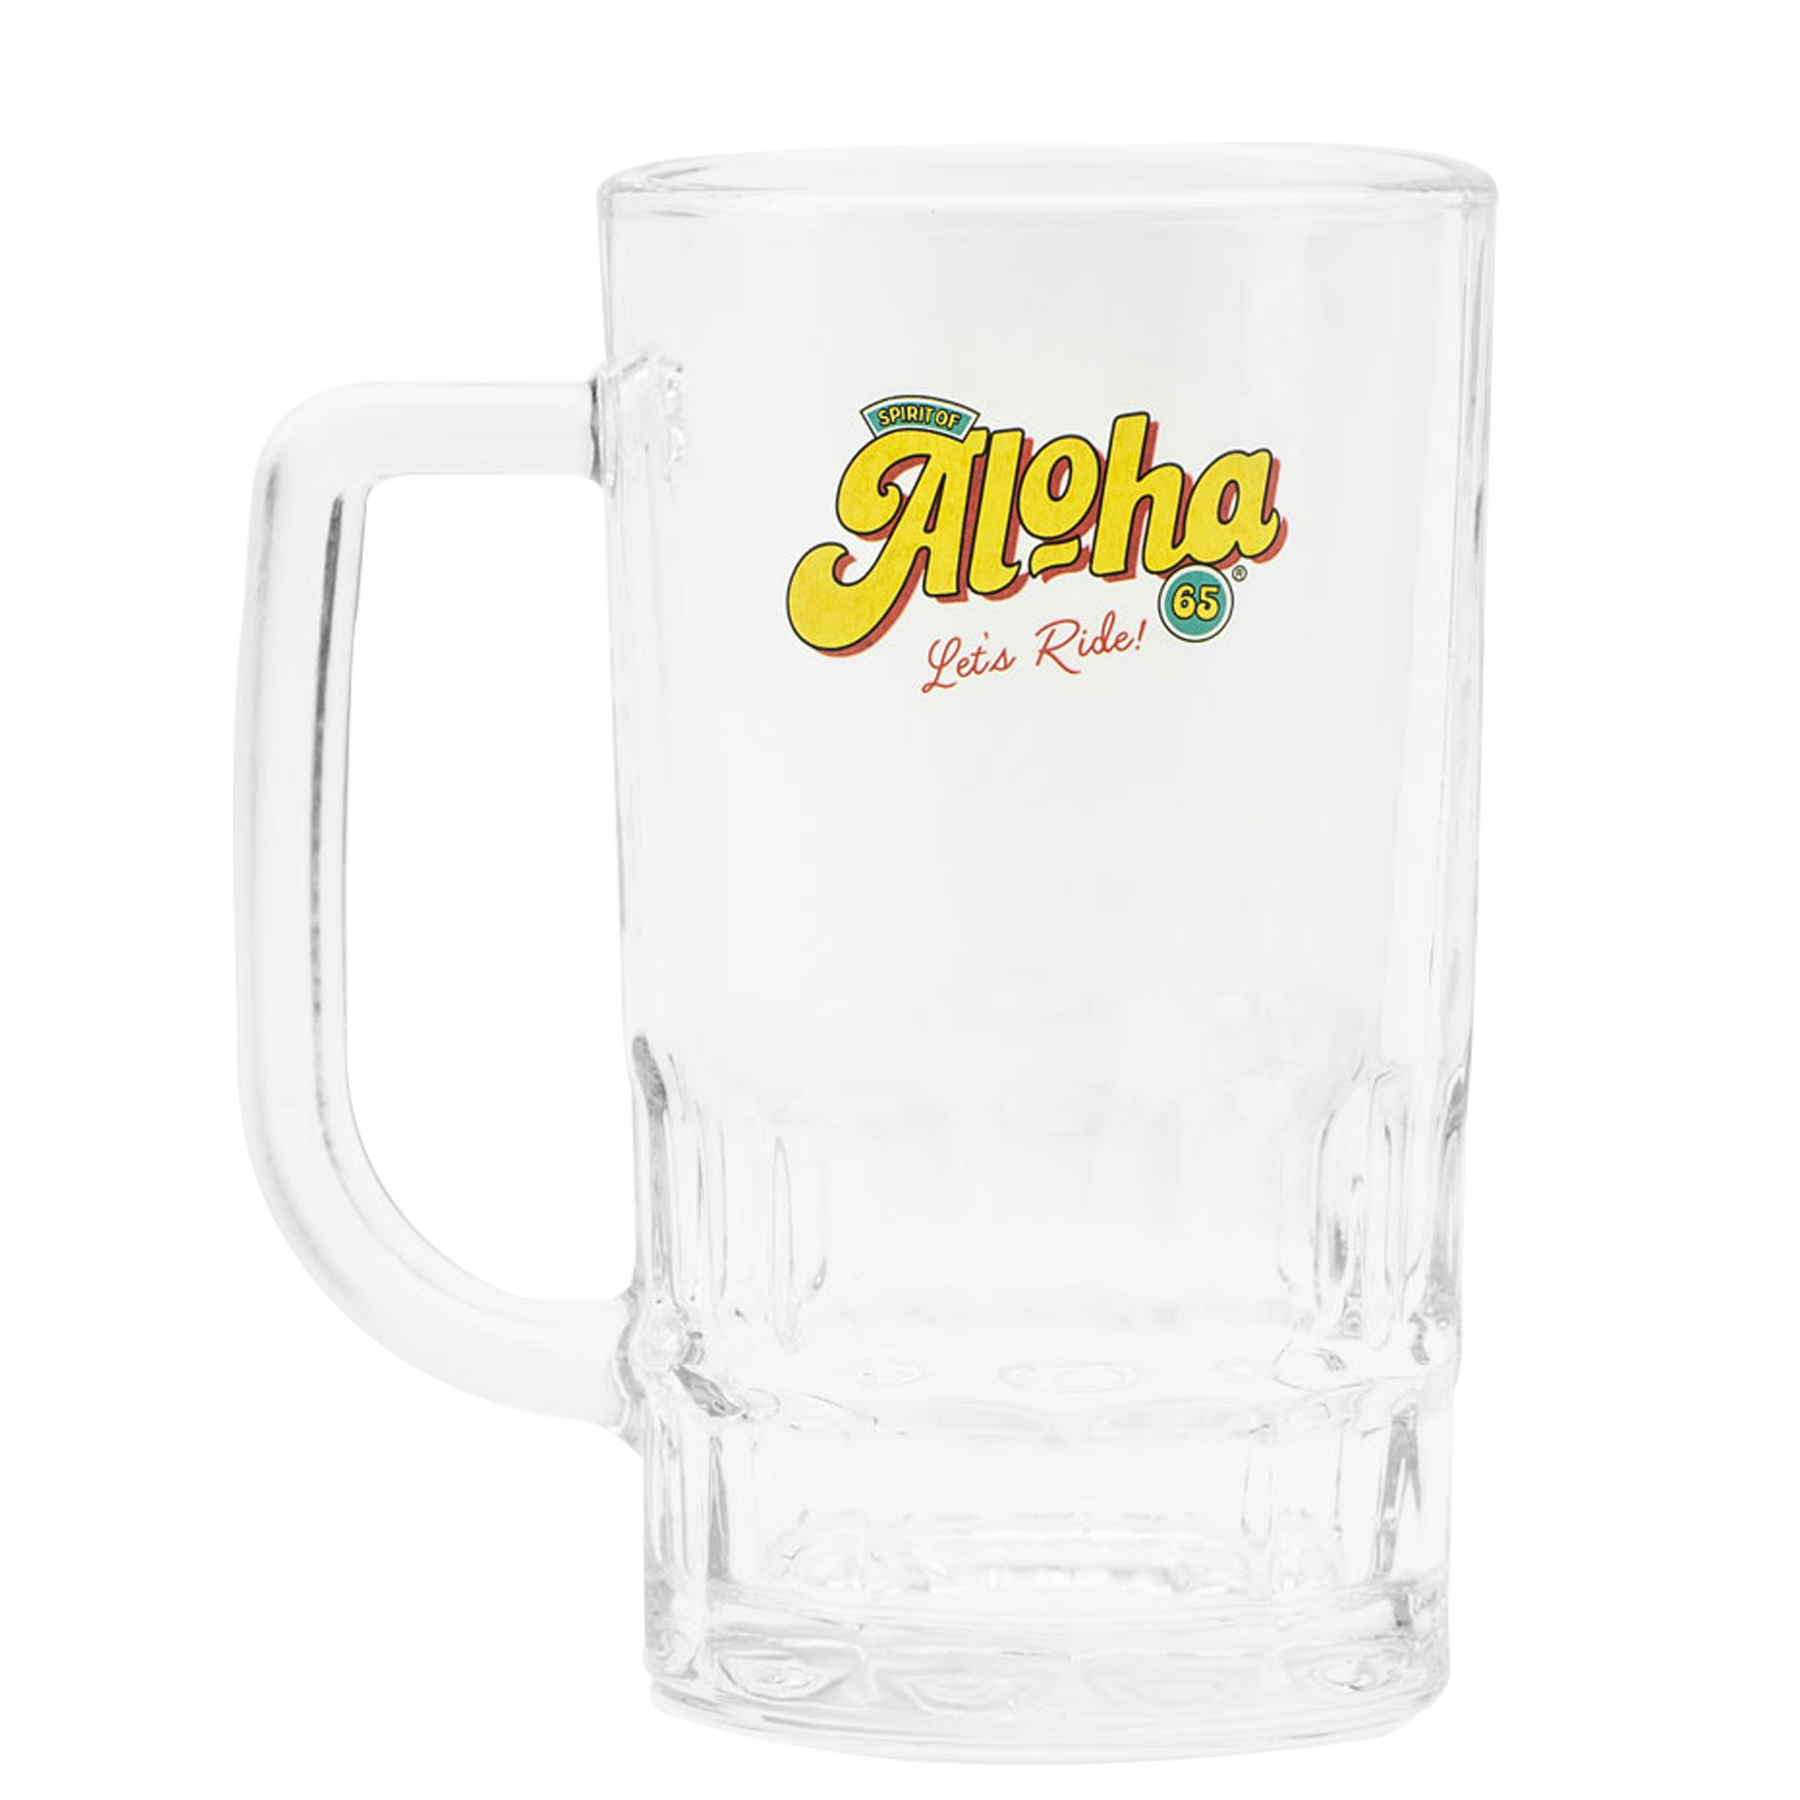 Aloha 65 Matata Mug